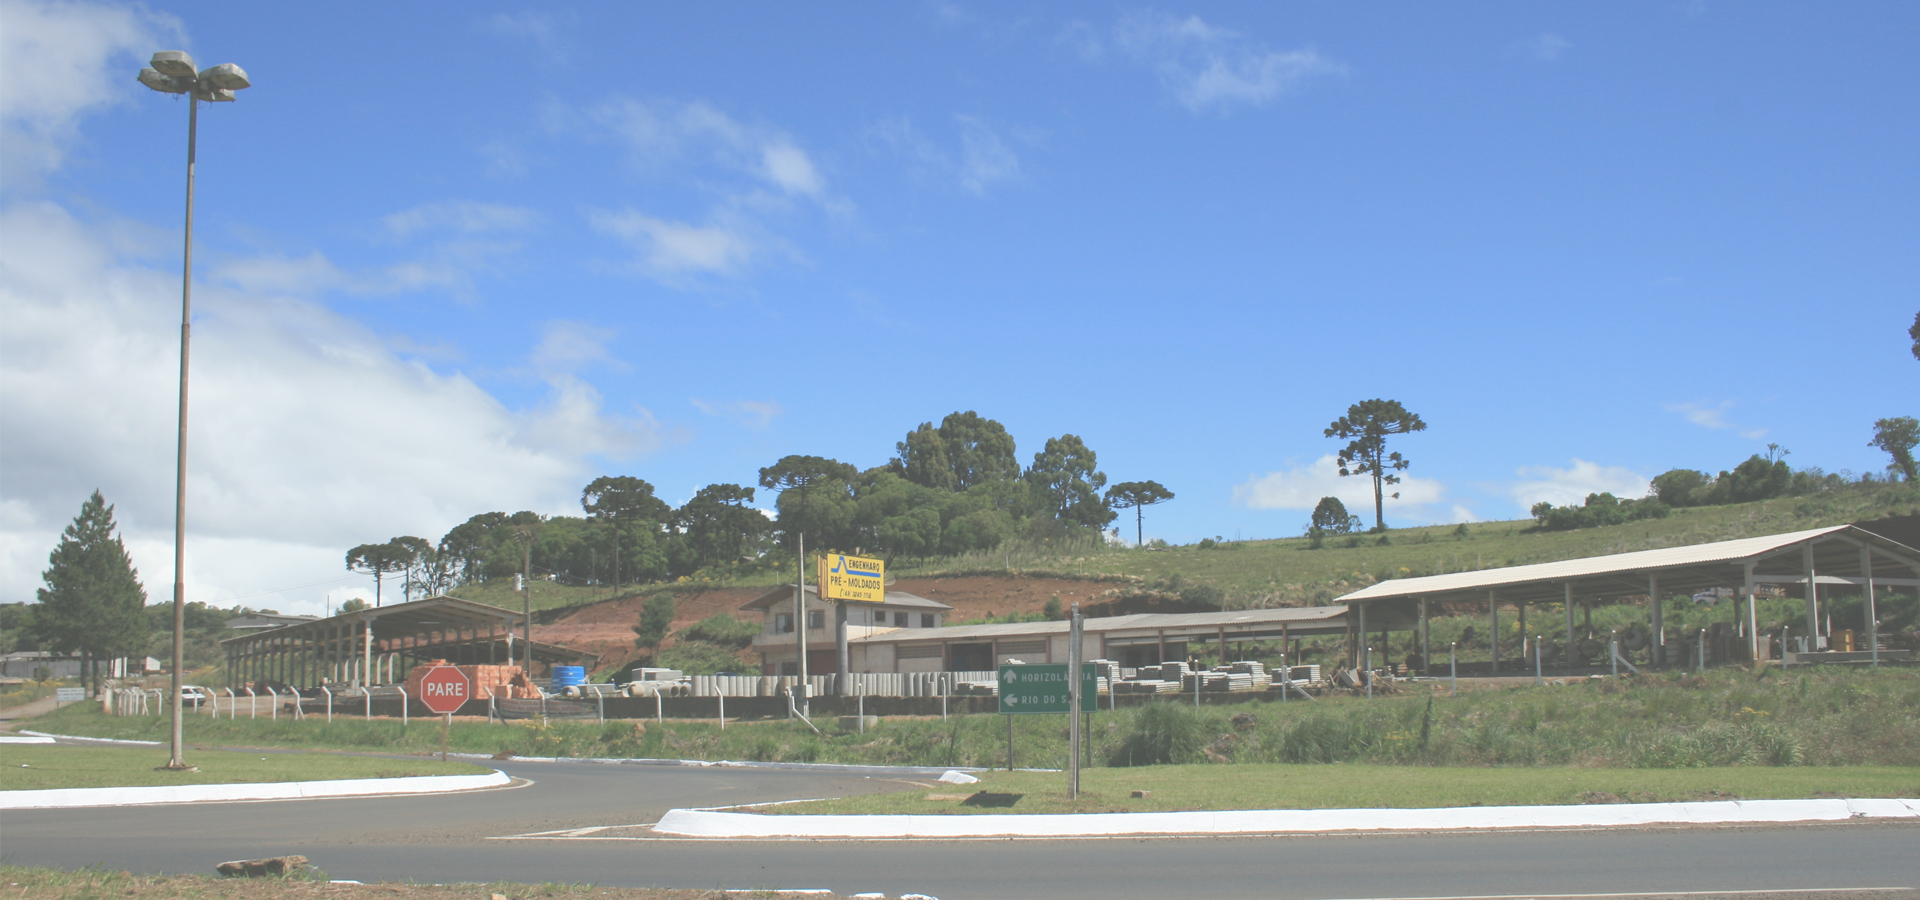 <b>Lebon Régis, Santa Catarina, South Region, Brazil</b>